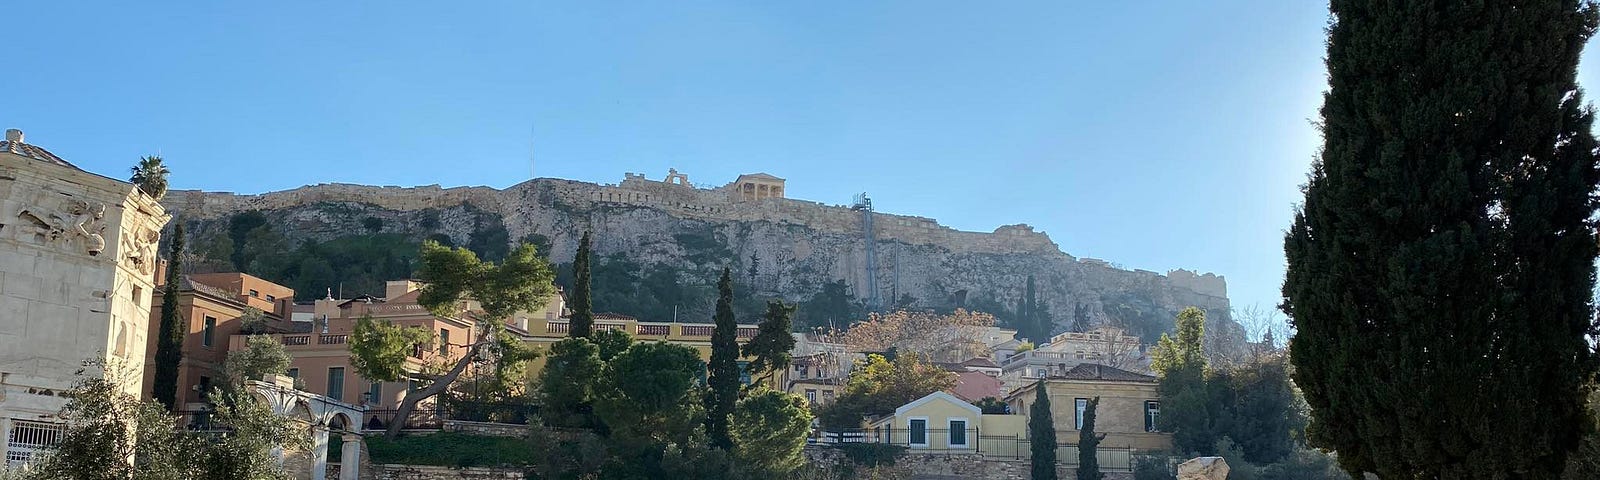 Acropolis and Plaka area in Athens, Greece. Photo by Areti Vassou.